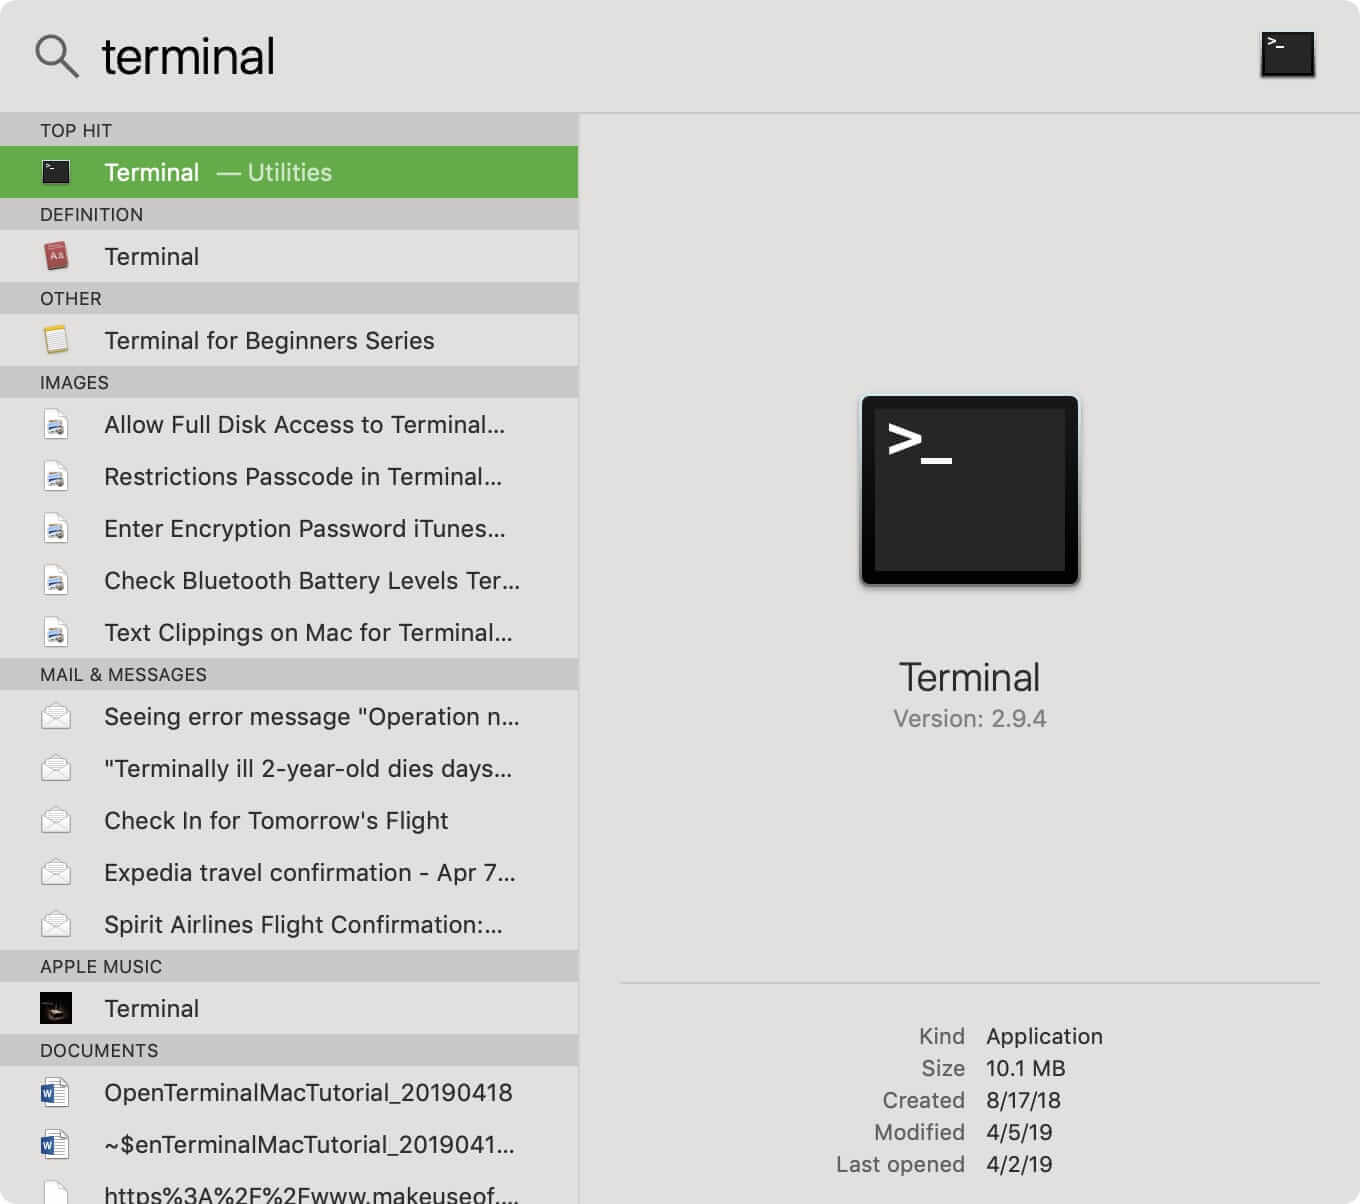 How to open terminal. Терминал Mac. Терминал на макбуке. Как открыть терминал в Mac os. Открыть терминал на макбук.